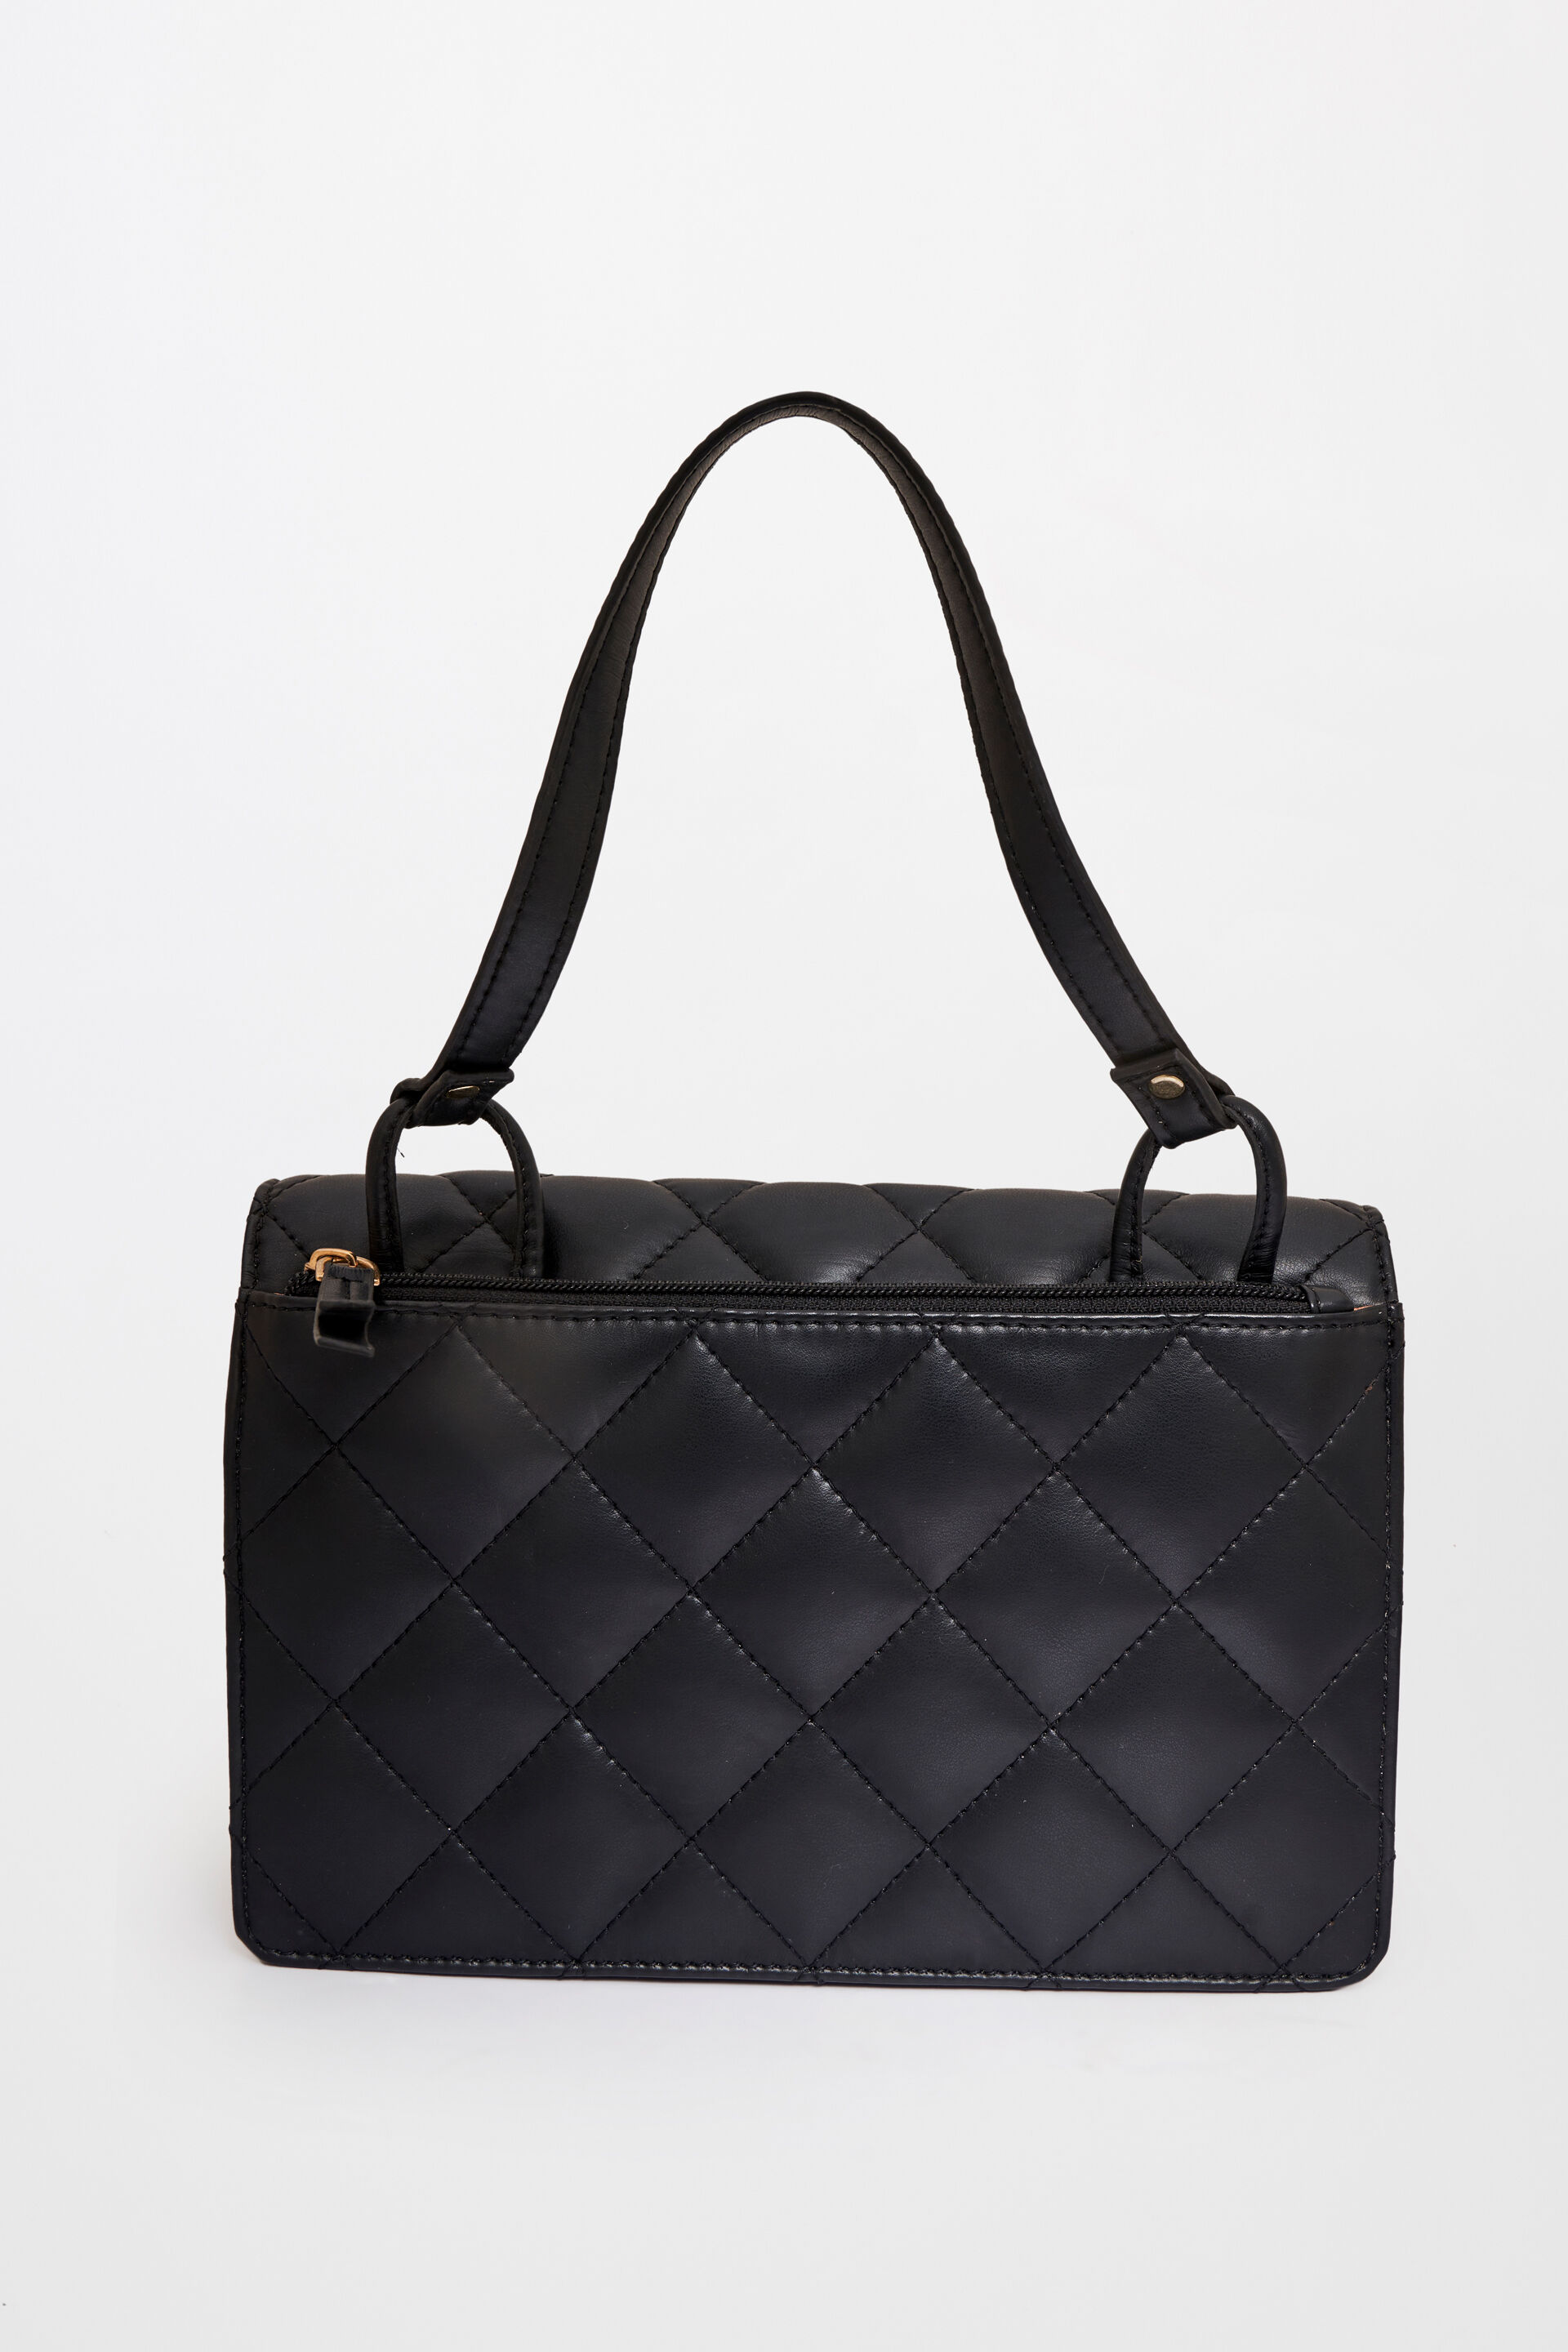 Buy Lavie Women's Sparkle Framed Clucth Black Ladies Purse Handbag at  Amazon.in